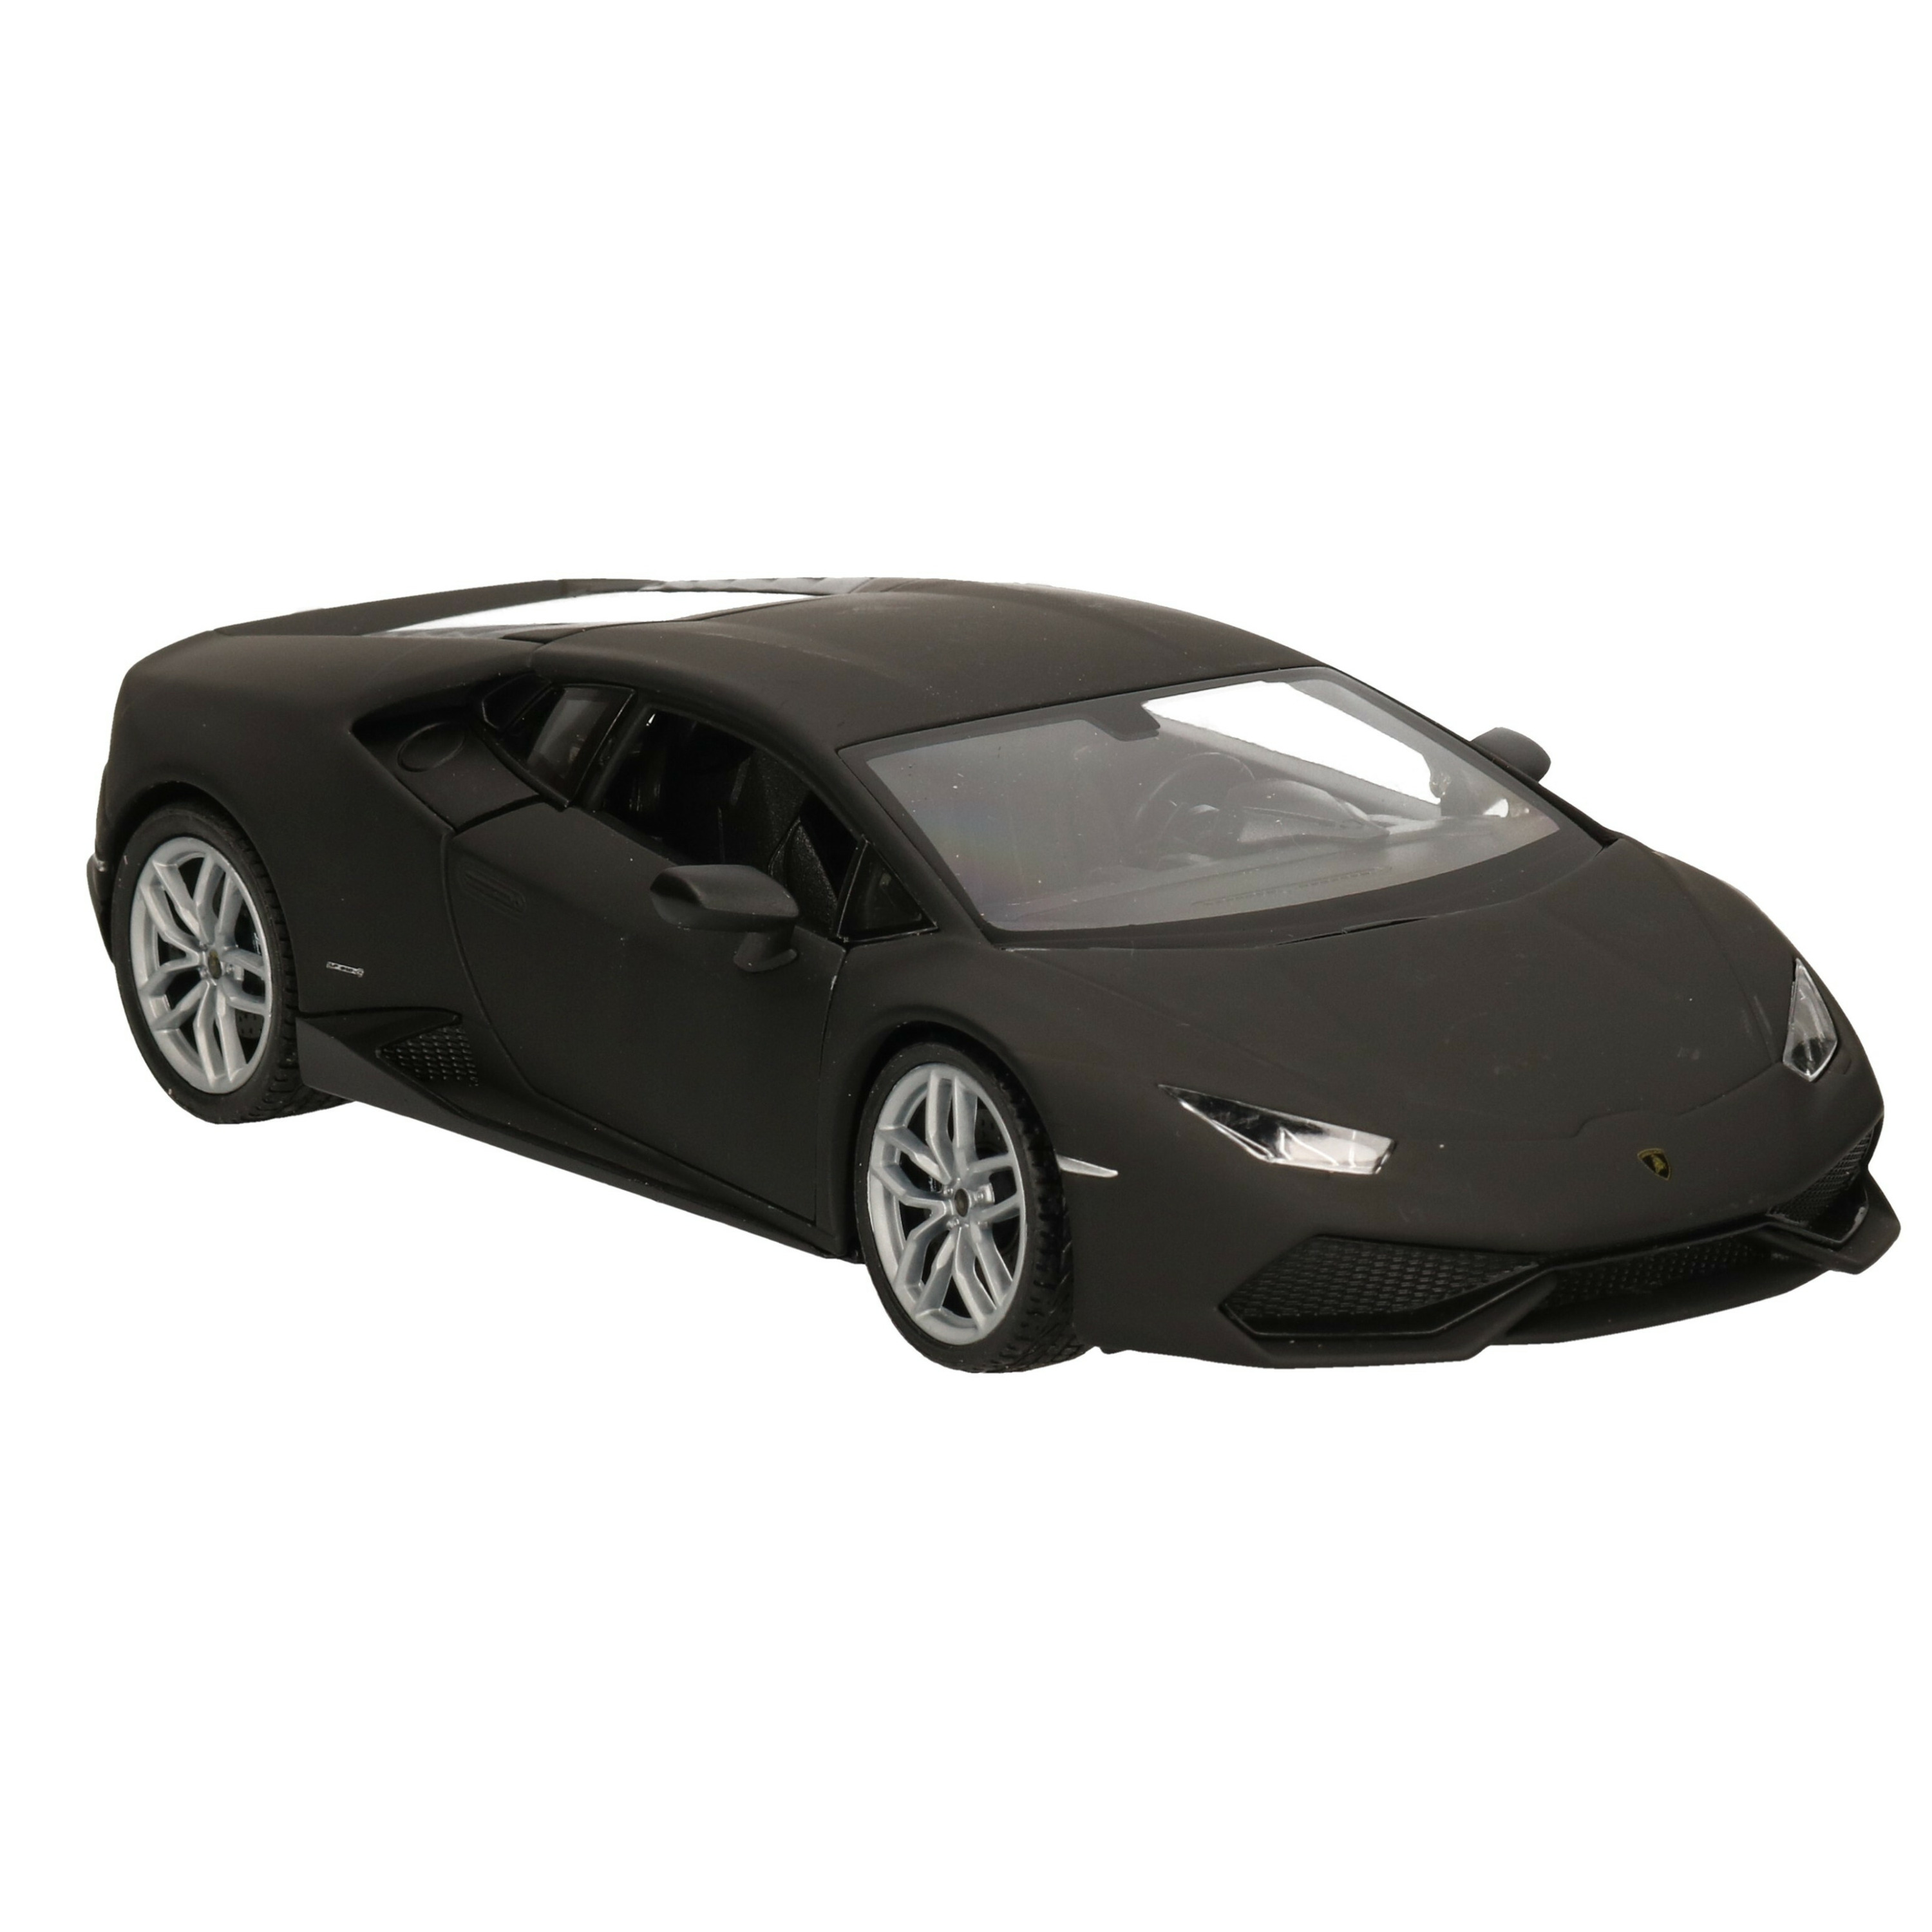 Modelauto-speelgoedauto Lamborghini Huracan matzwart schaal 1:24-19 x 8 x 5 cm